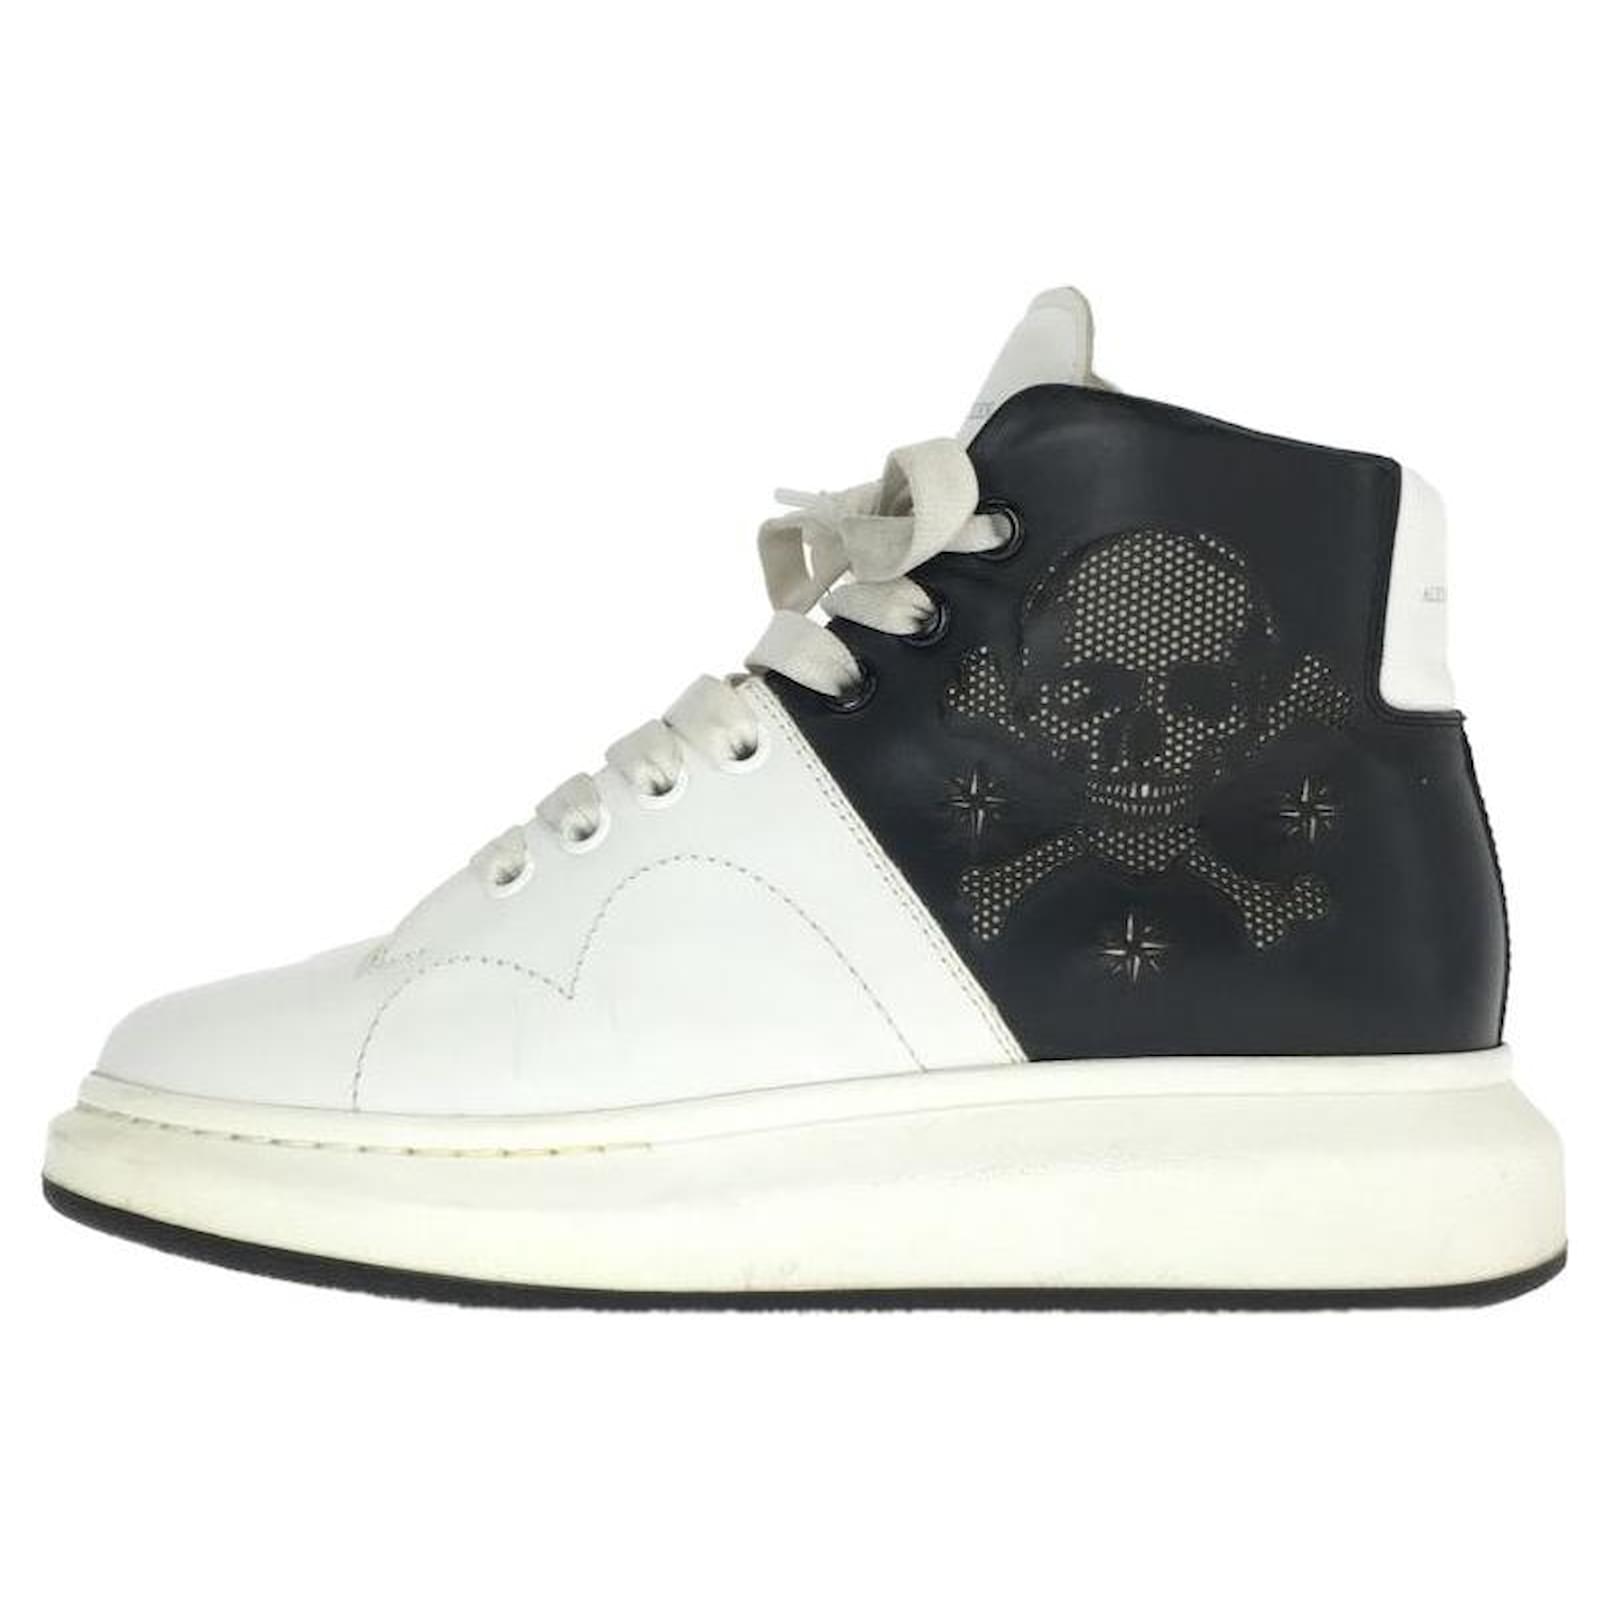 Alexander McQueen ◇ High-top sneakers / 41 / WHT / Leather